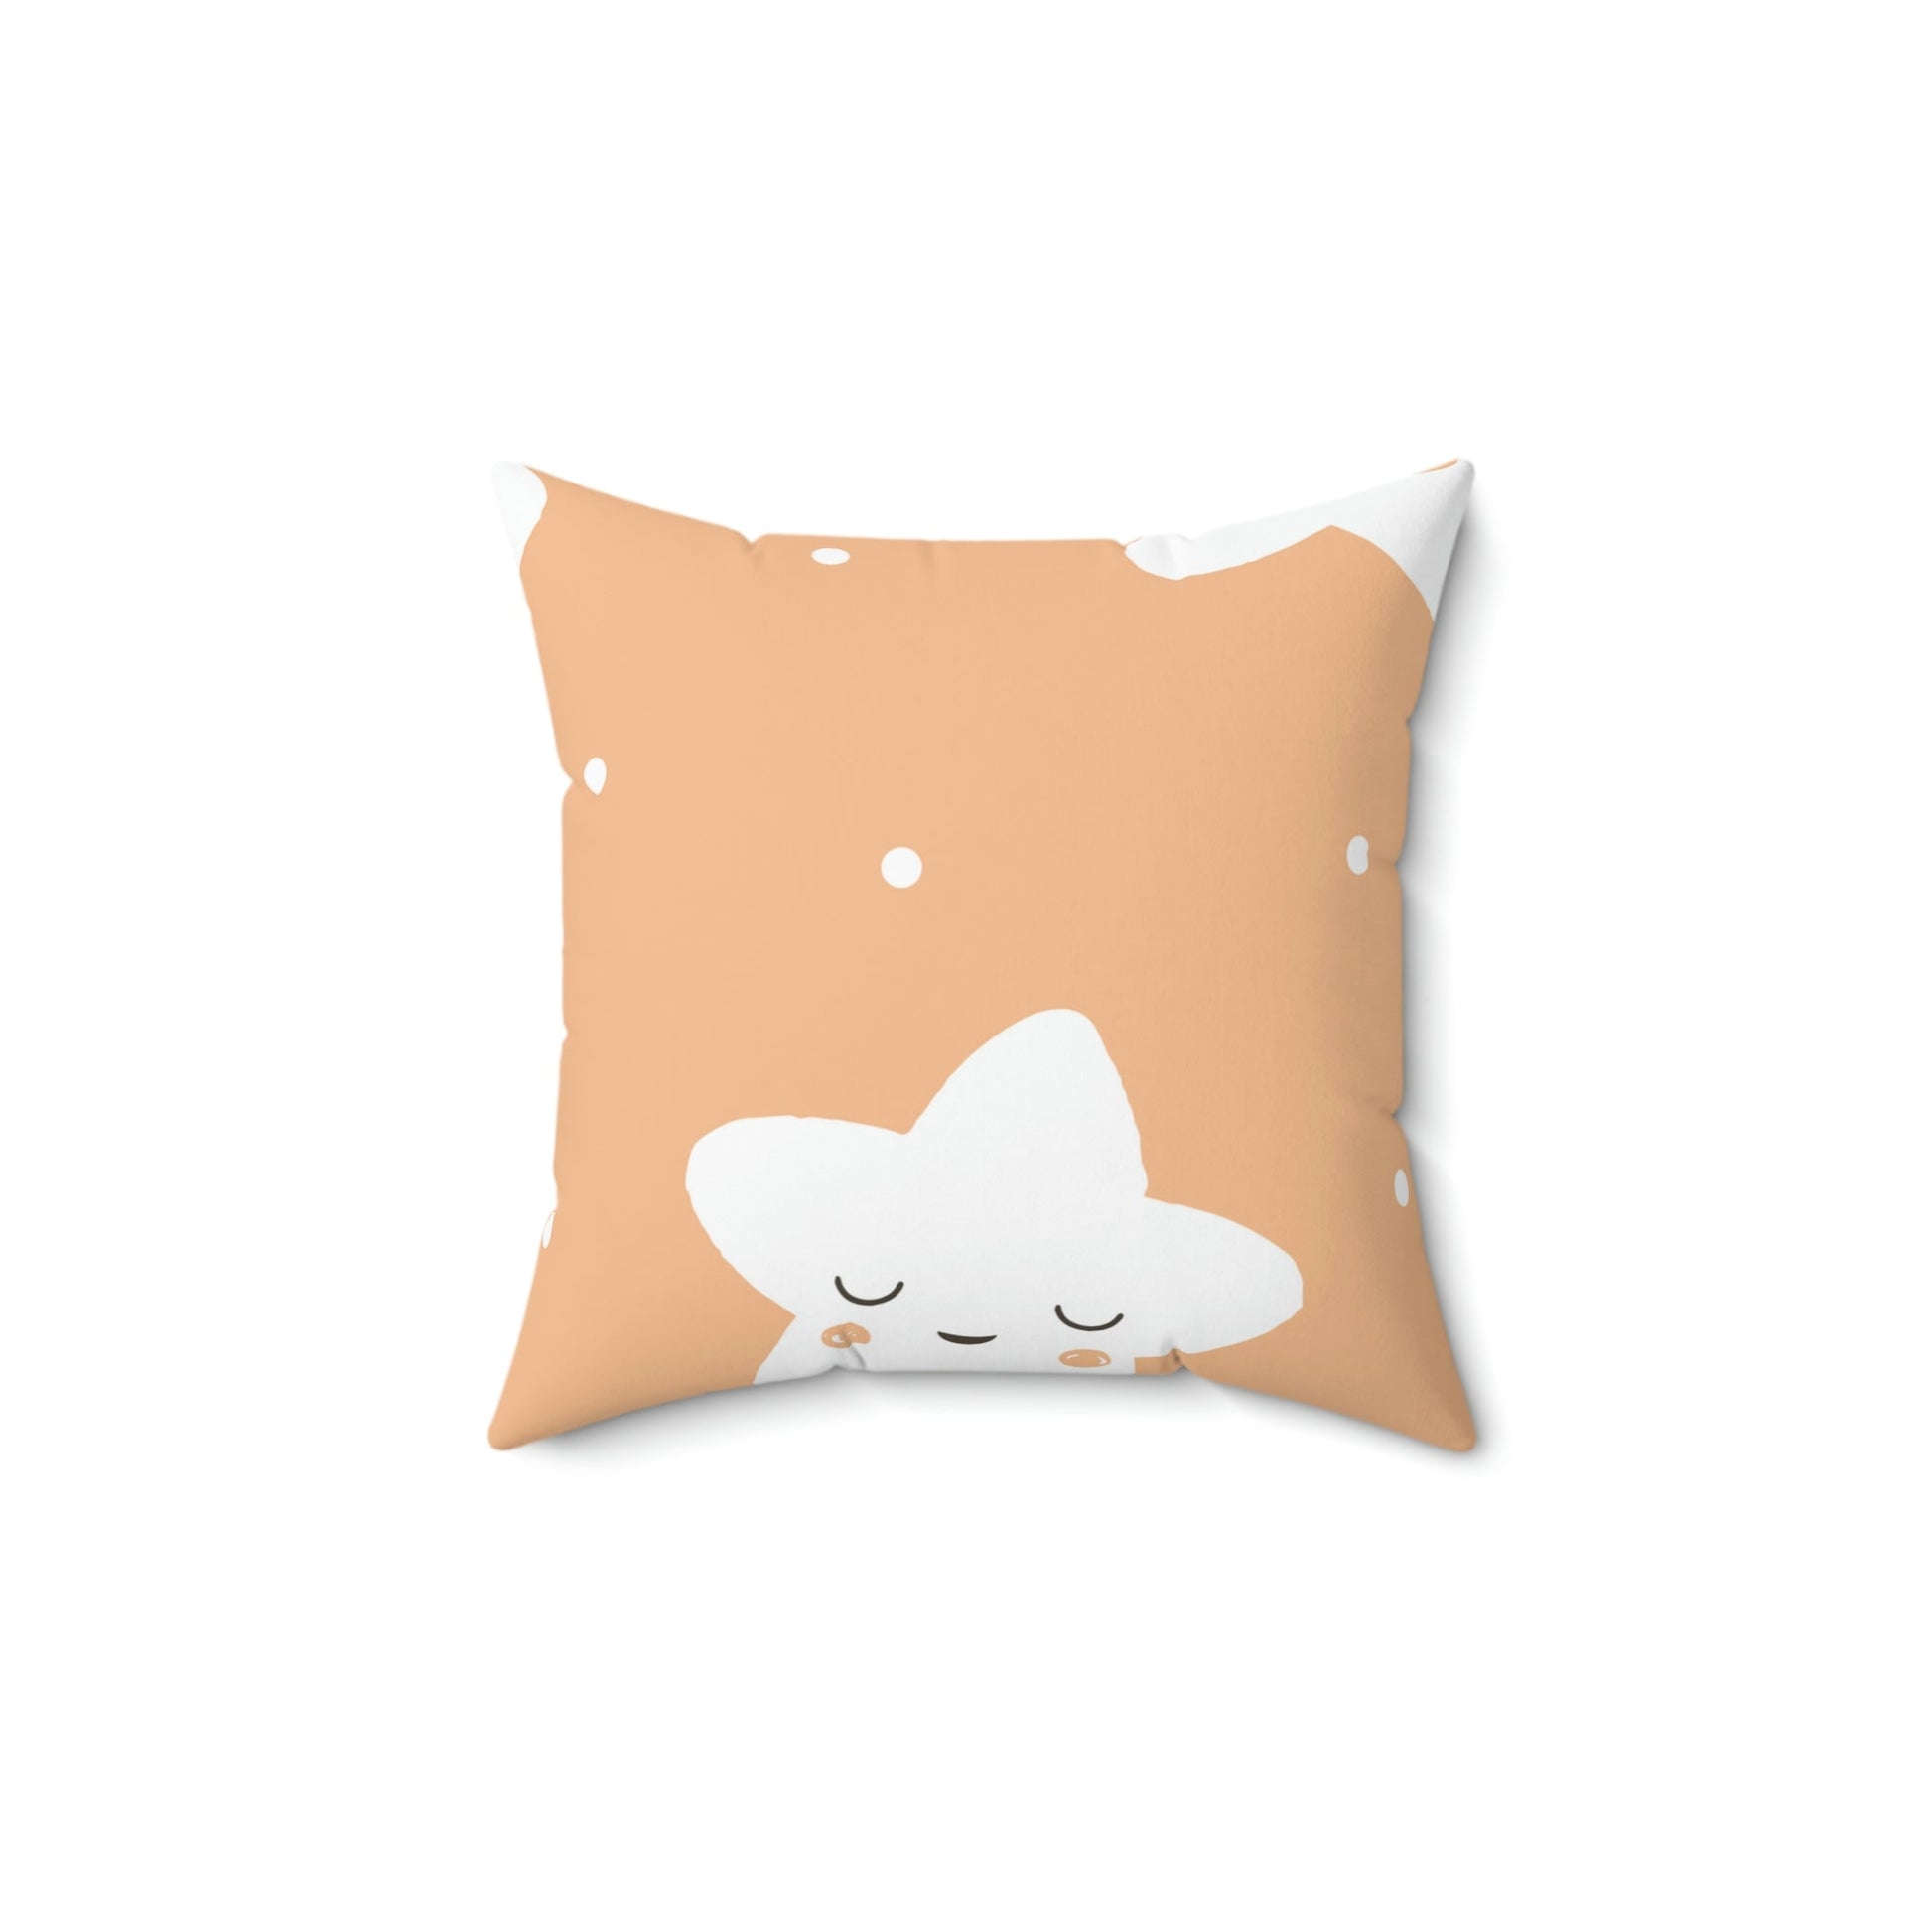 Sleepy Baby Star Peach Tangerine Square Pillow Home Decor Pink Sweetheart